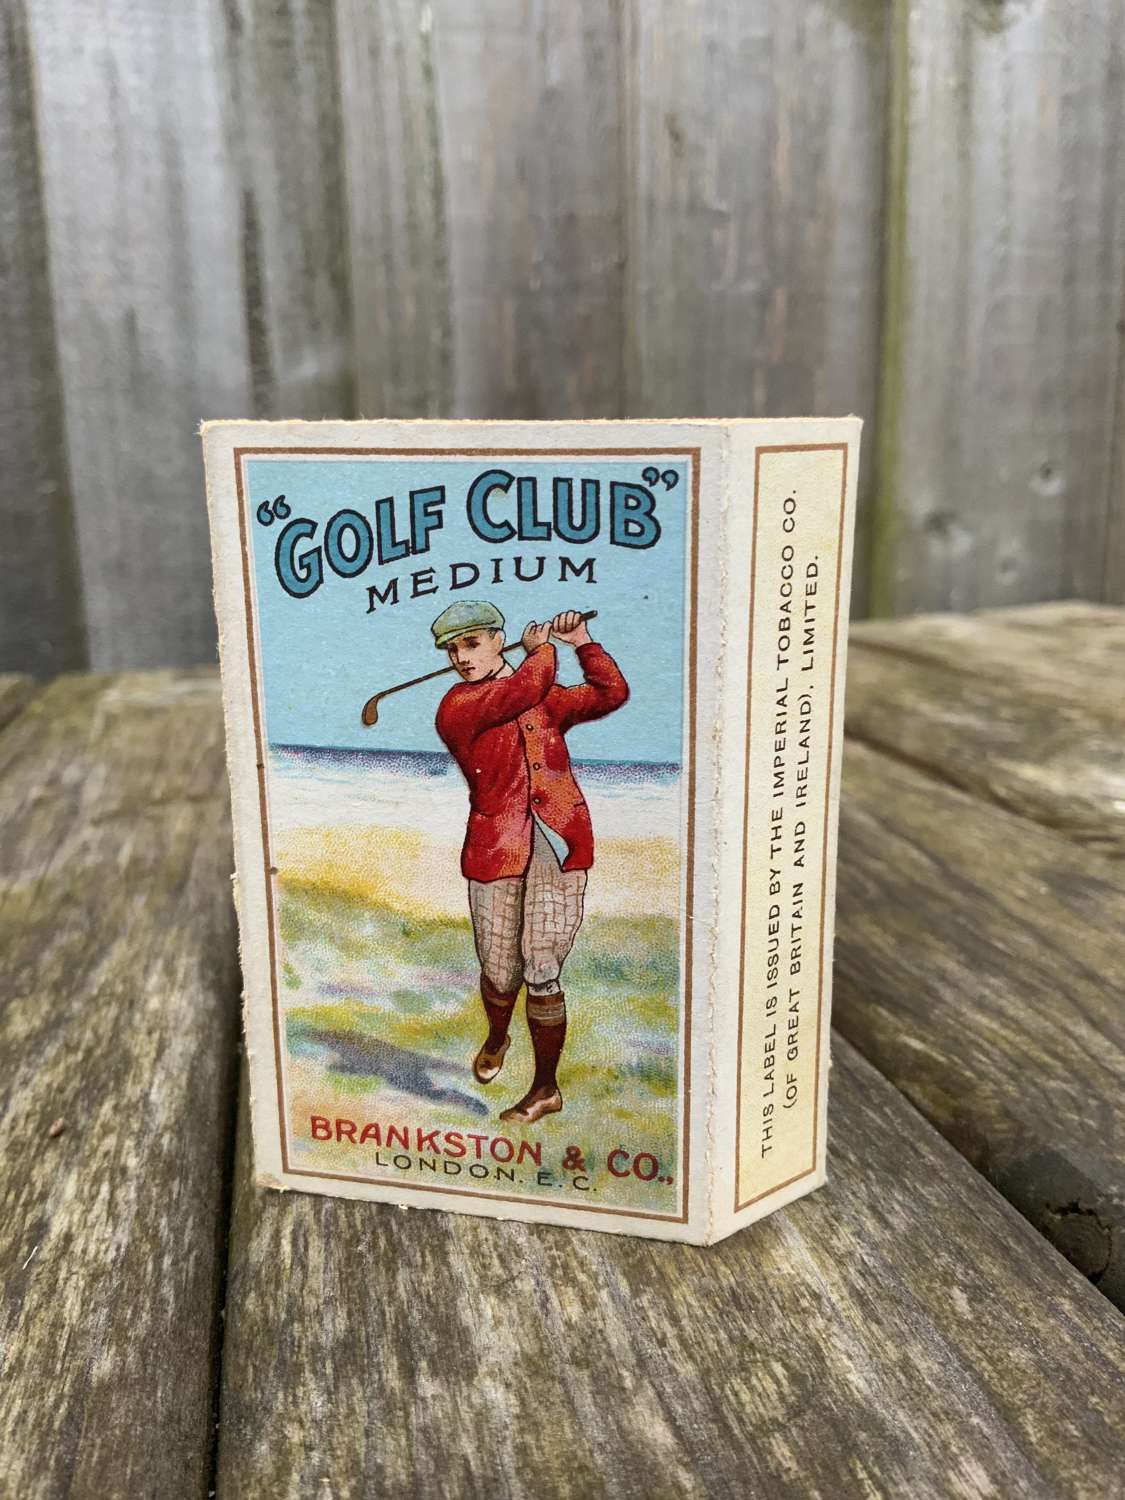 Stunning Golf club cigarette packet by brankston co